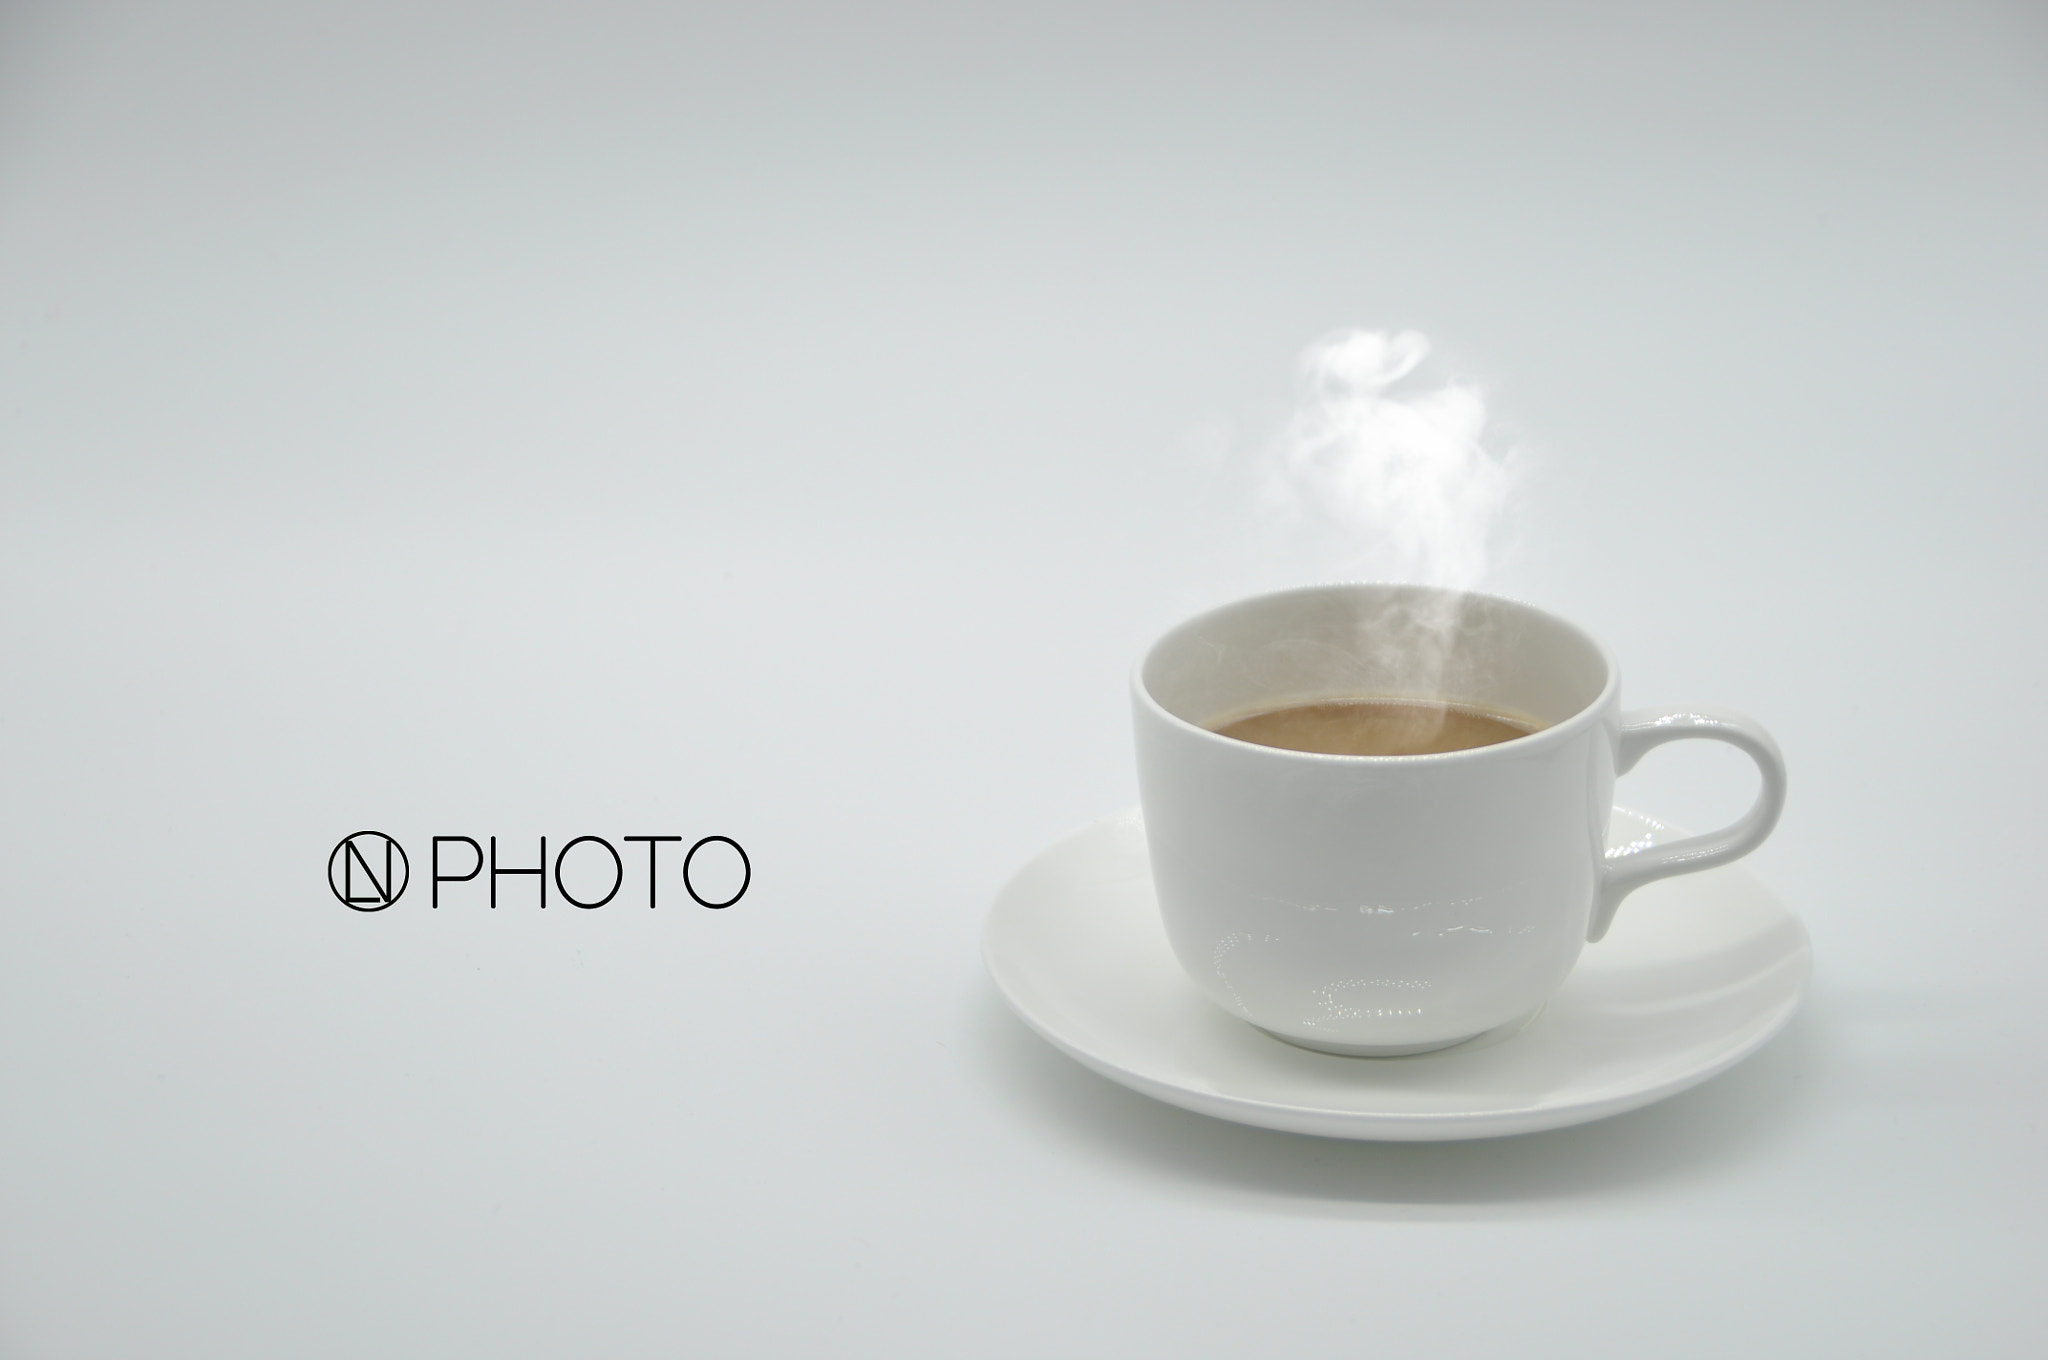 Nikon D90 + Tamron AF 18-200mm F3.5-6.3 XR Di II LD Aspherical (IF) Macro sample photo. Coffee photography